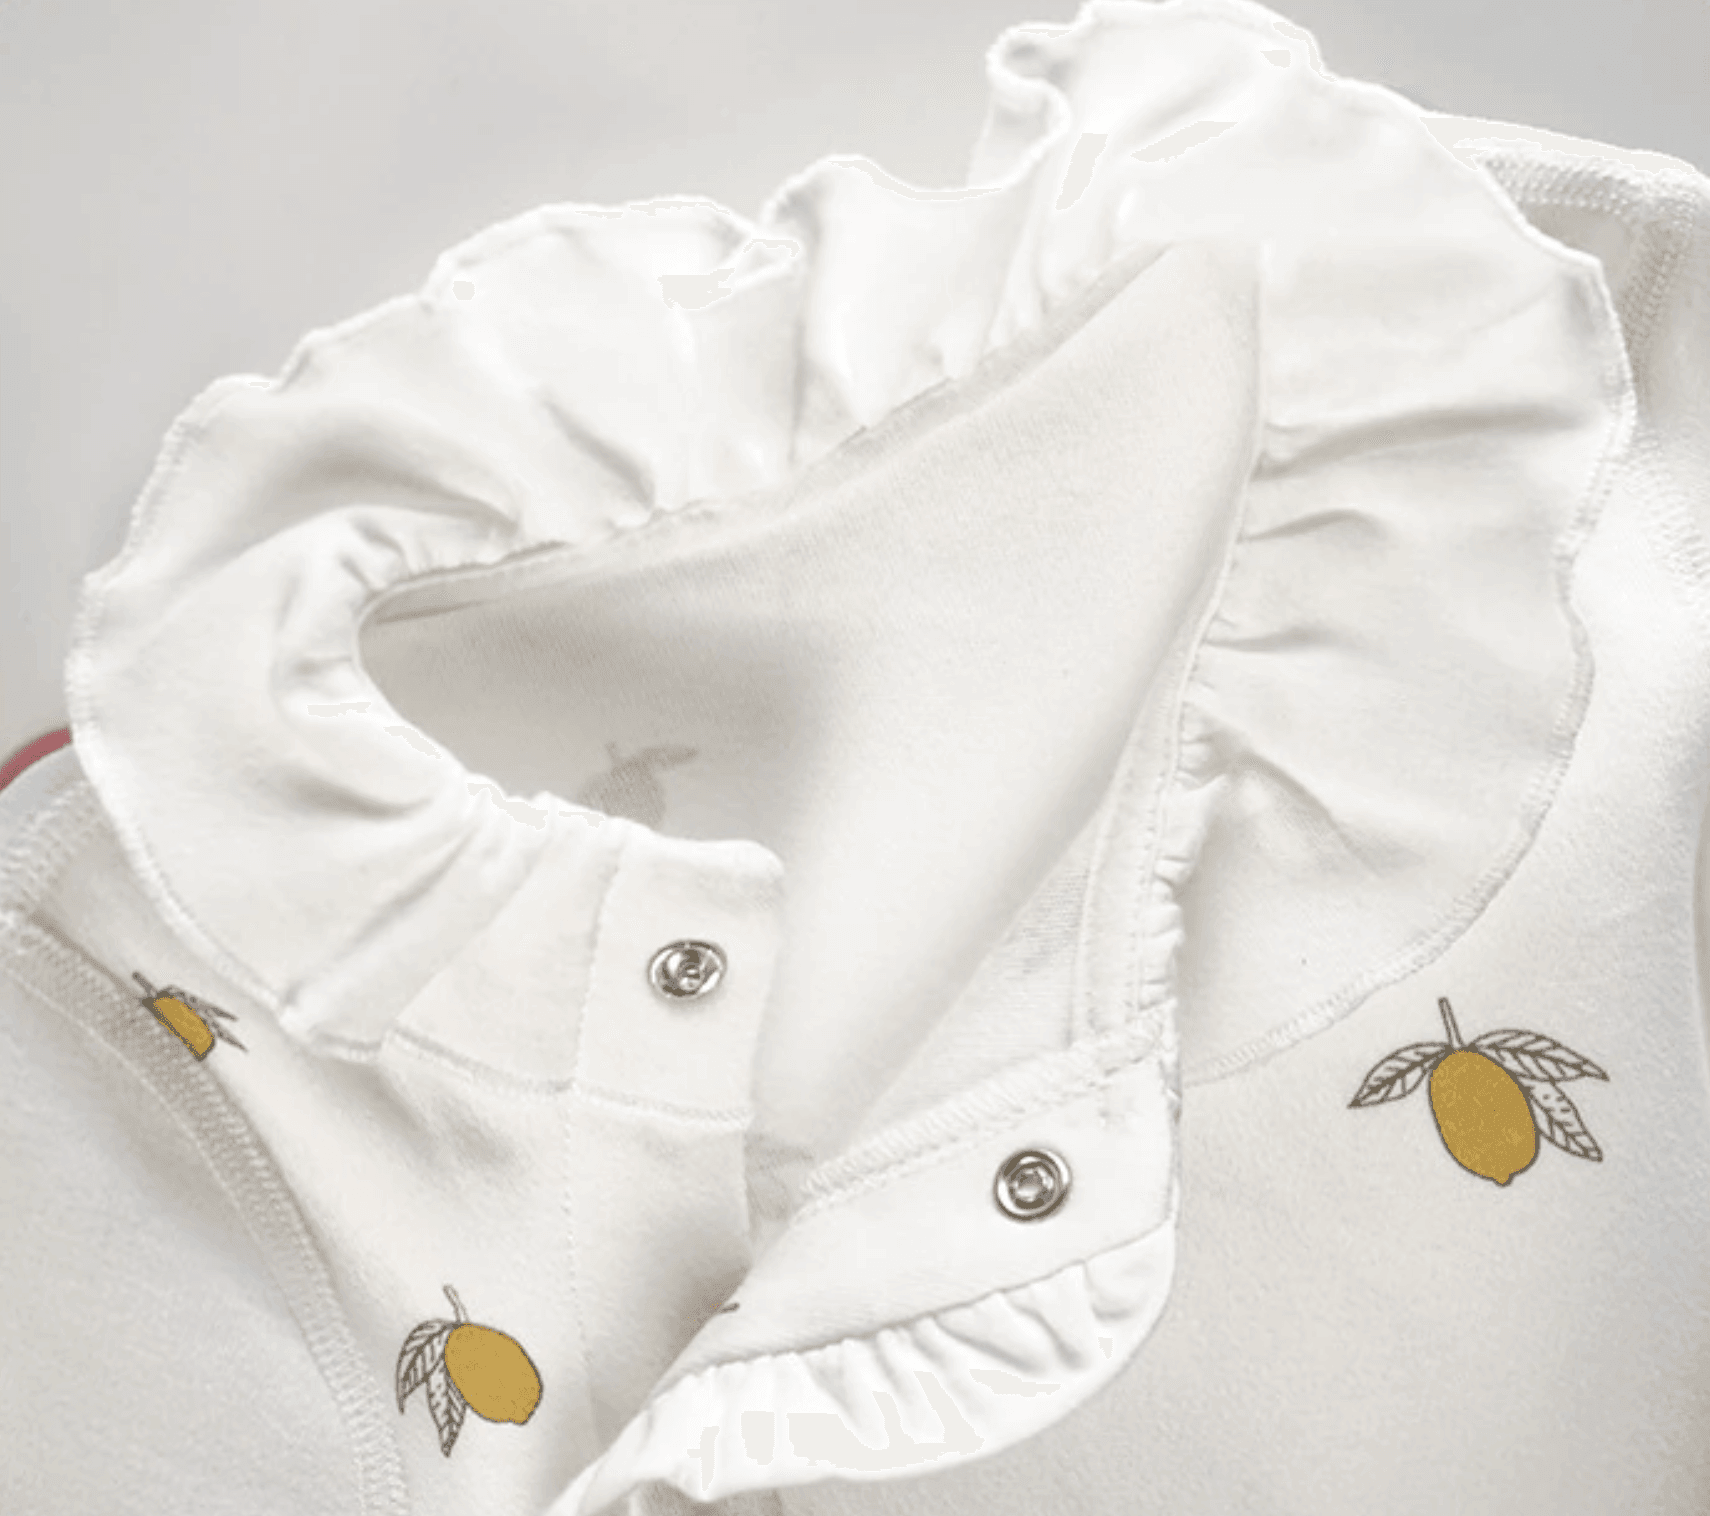 Organic Lemon Ruffle Suit - Belle Baby